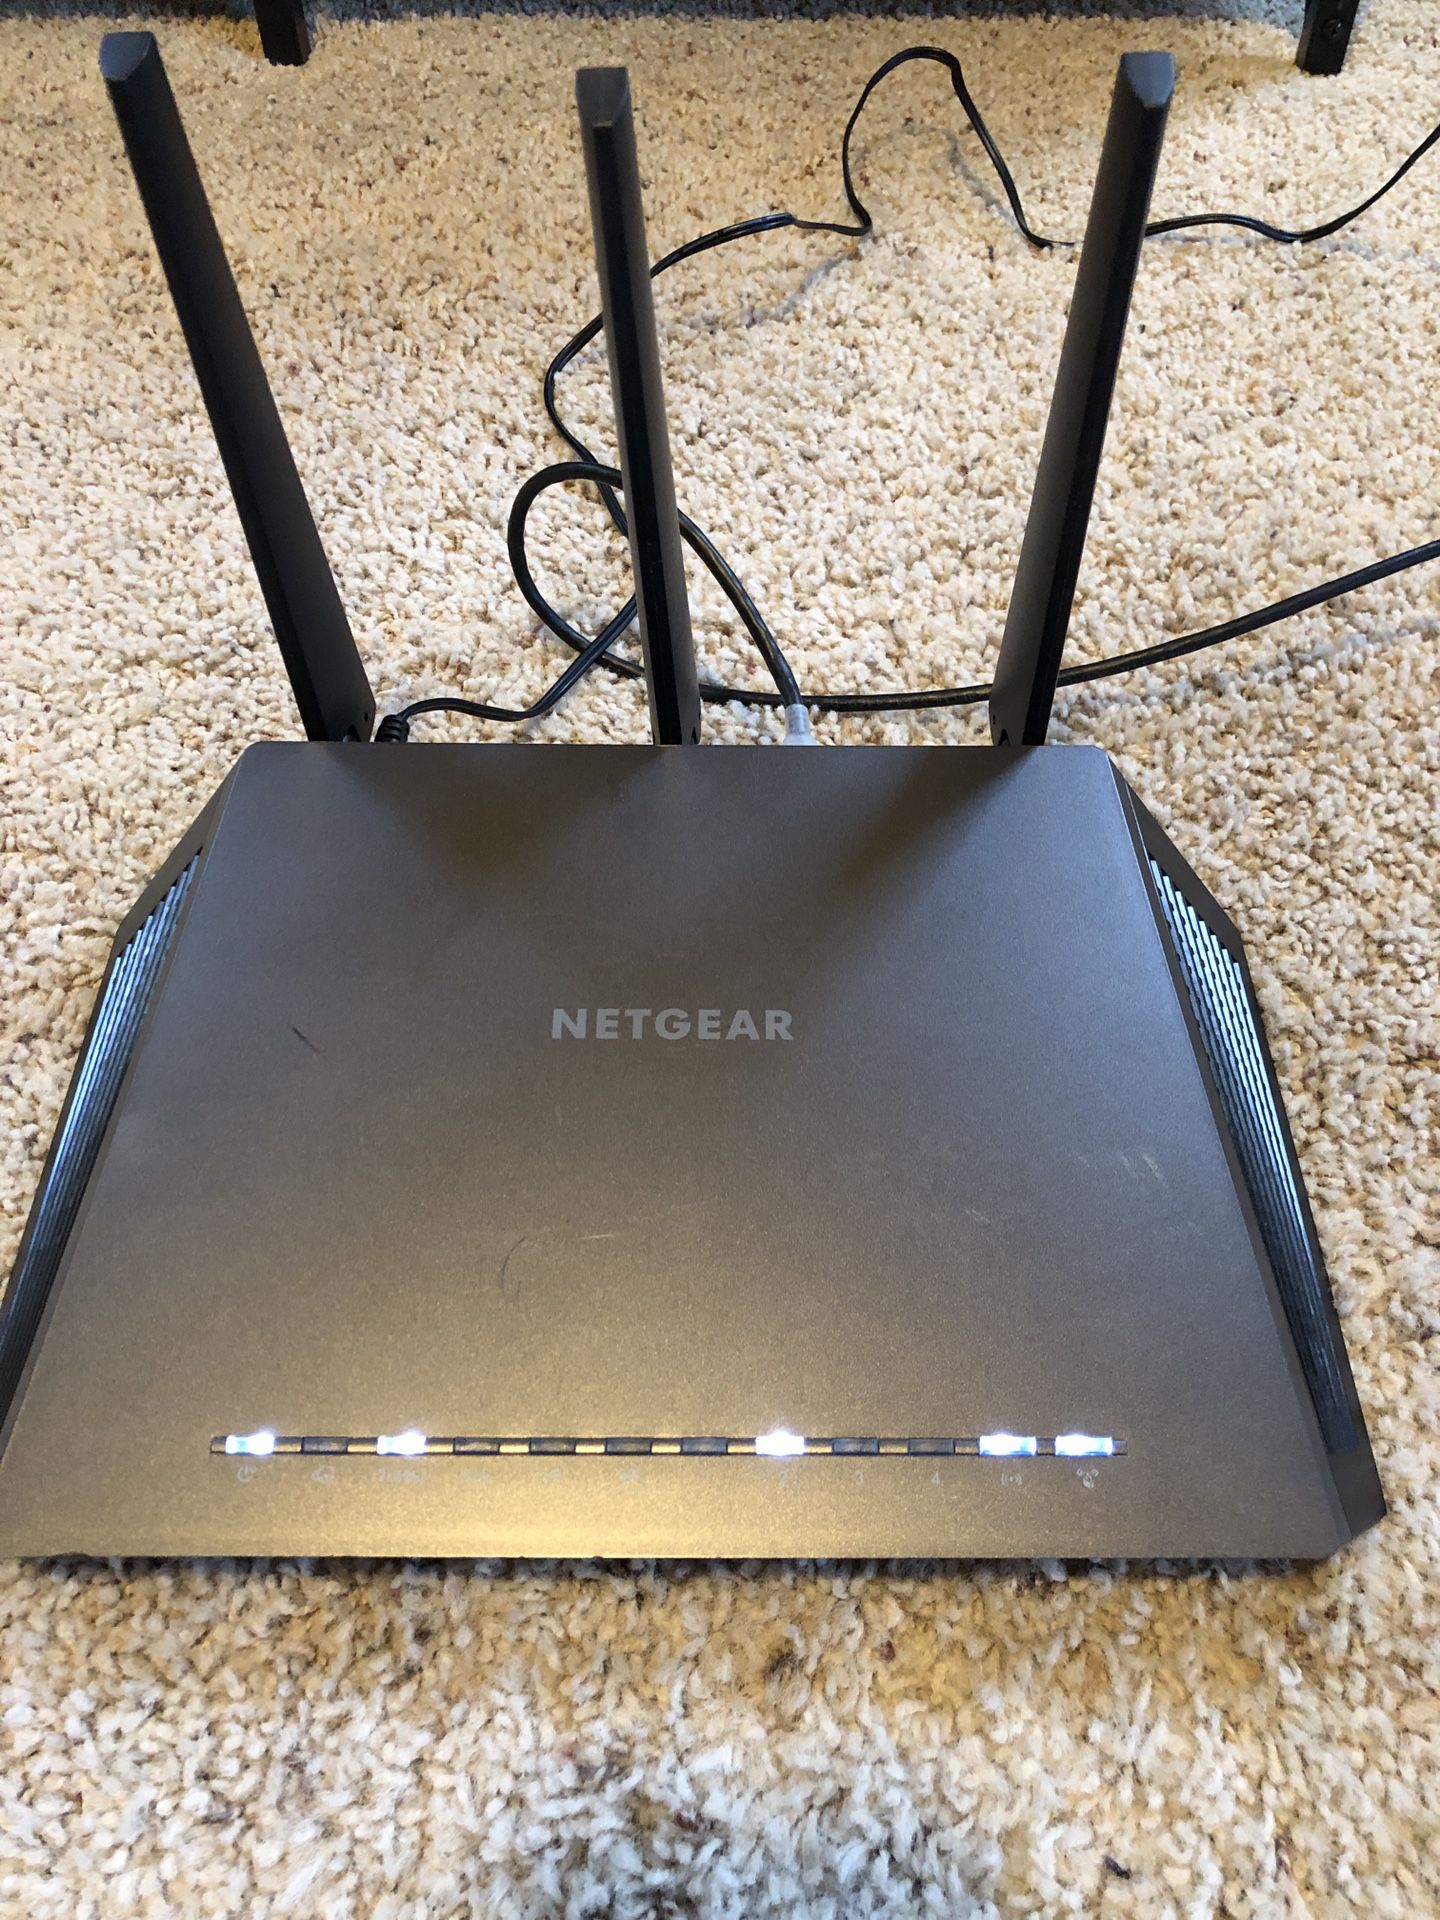 Netgear Nighthawk Dual Band Wi-Fi Router